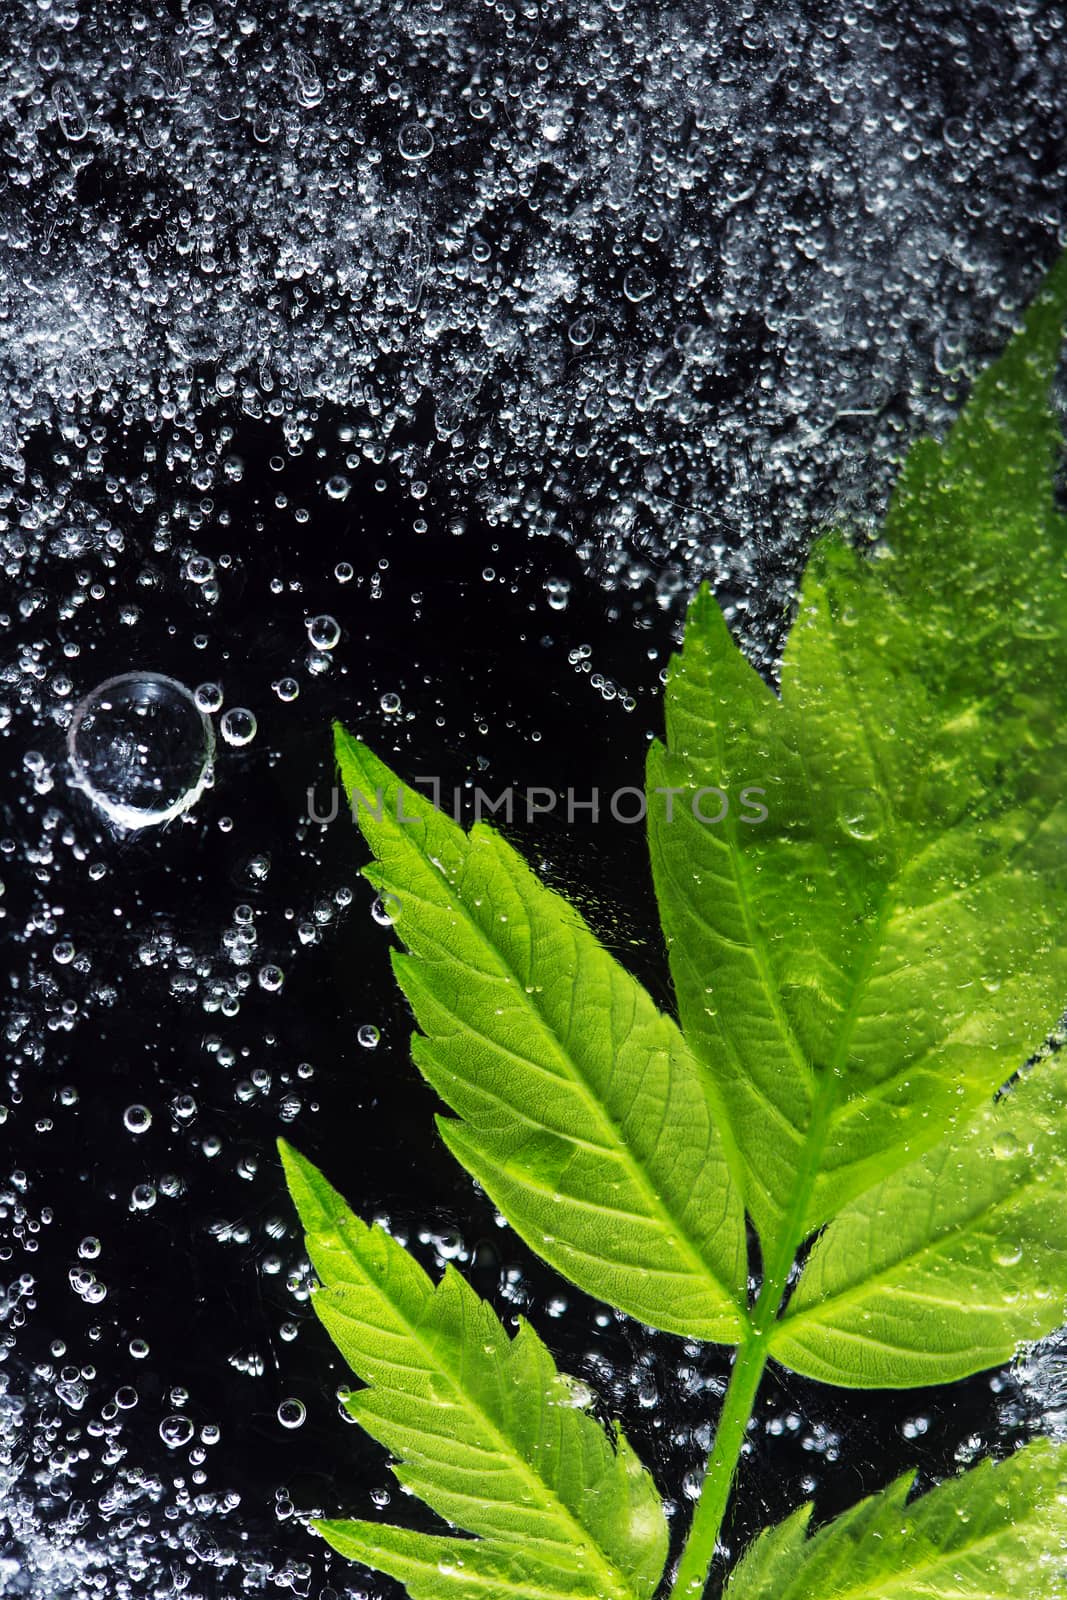 Green leaf in frozen water under ice surface against black background